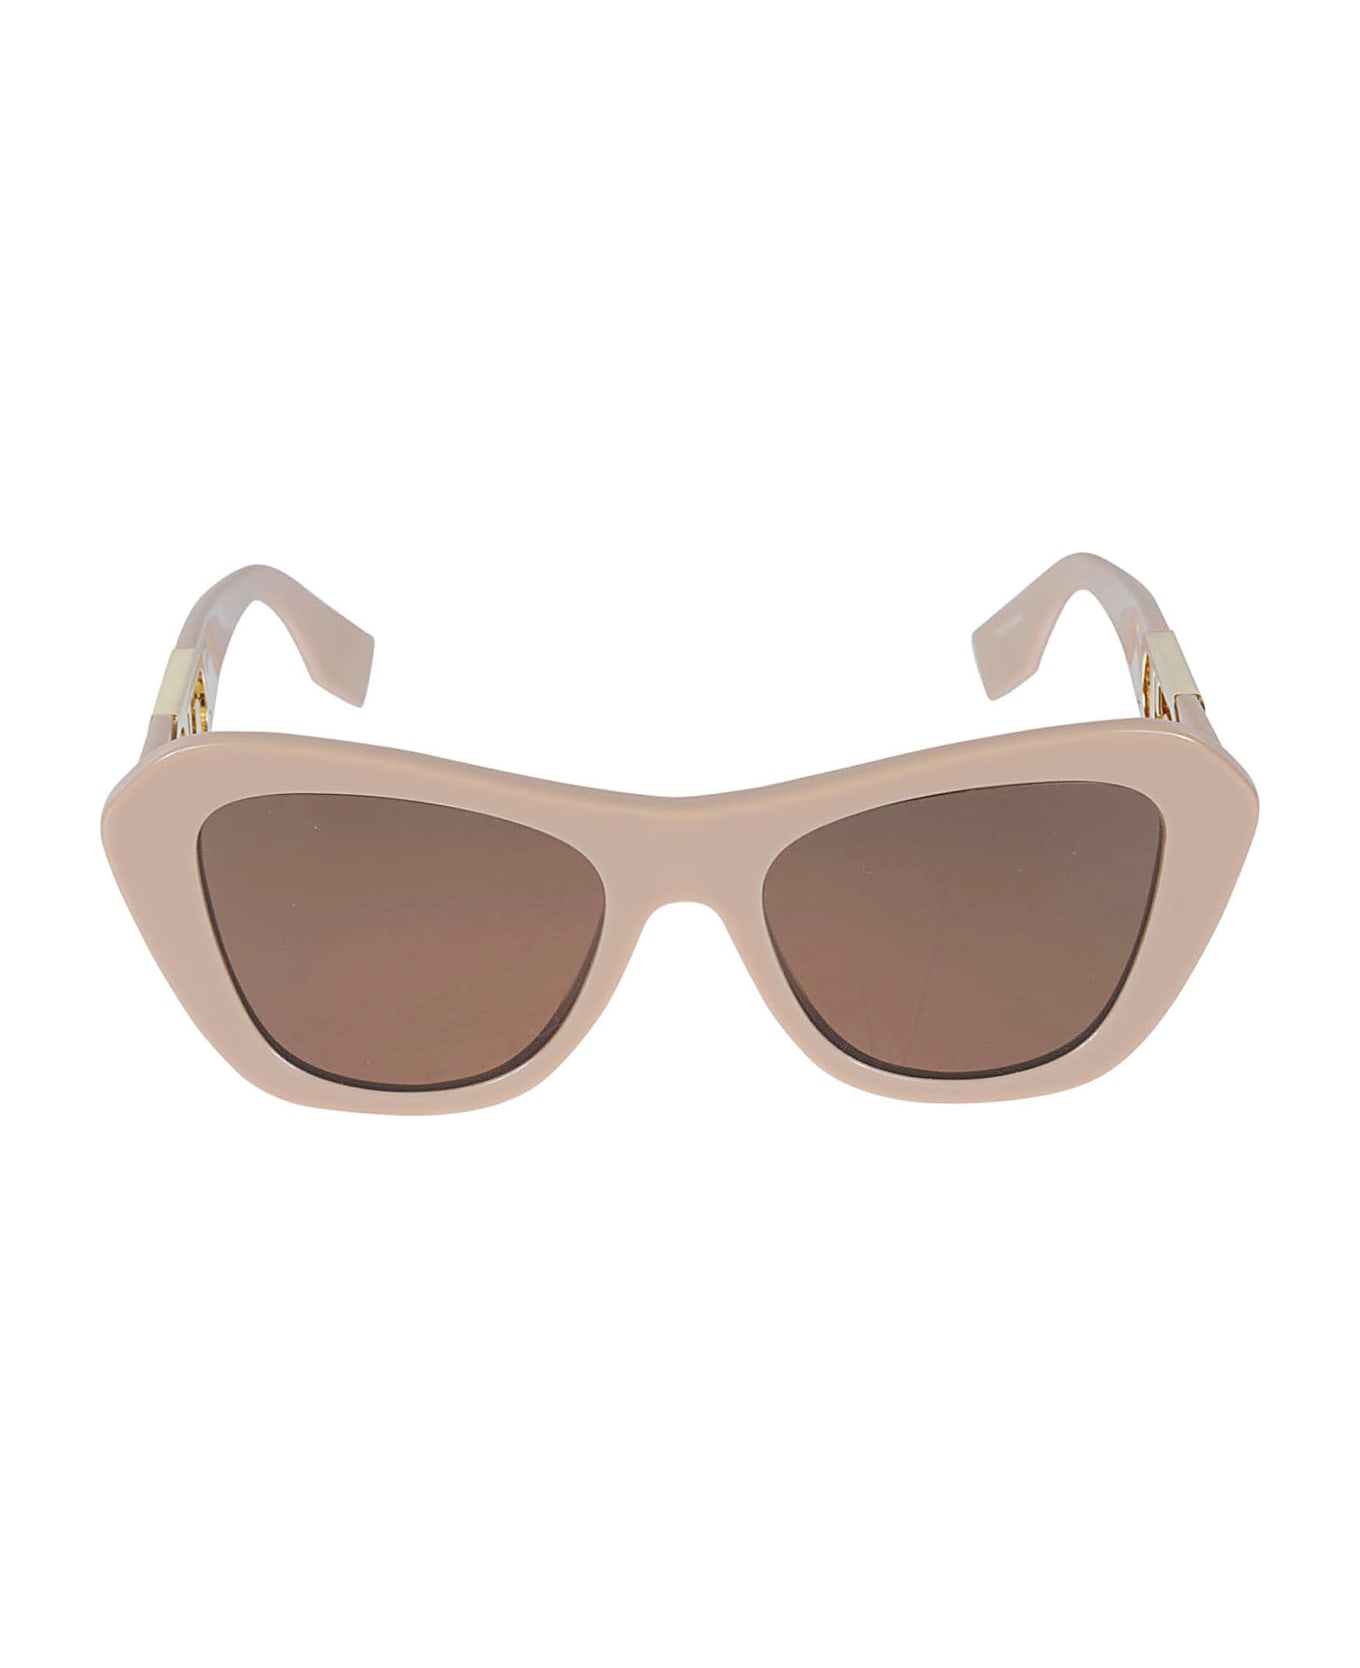 Fendi Eyewear Wayfarer Sunglasses - 57e